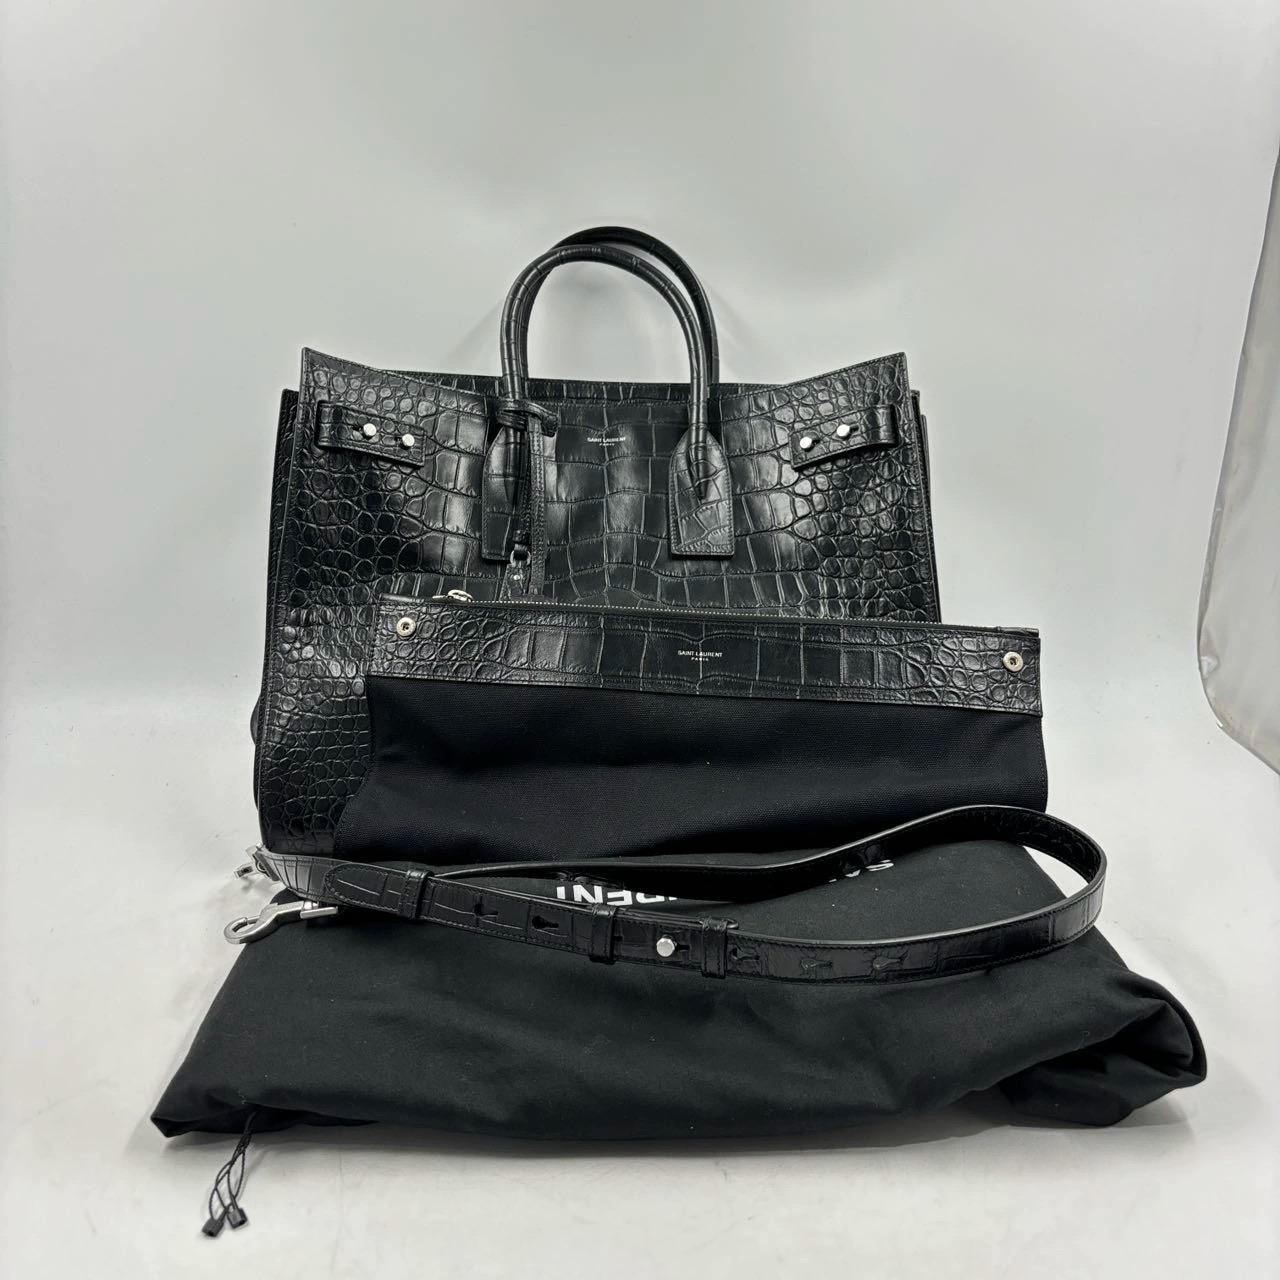 Saint Laurent Sac De Jour Large Black Crocodile-embossed Leather Handbag 2